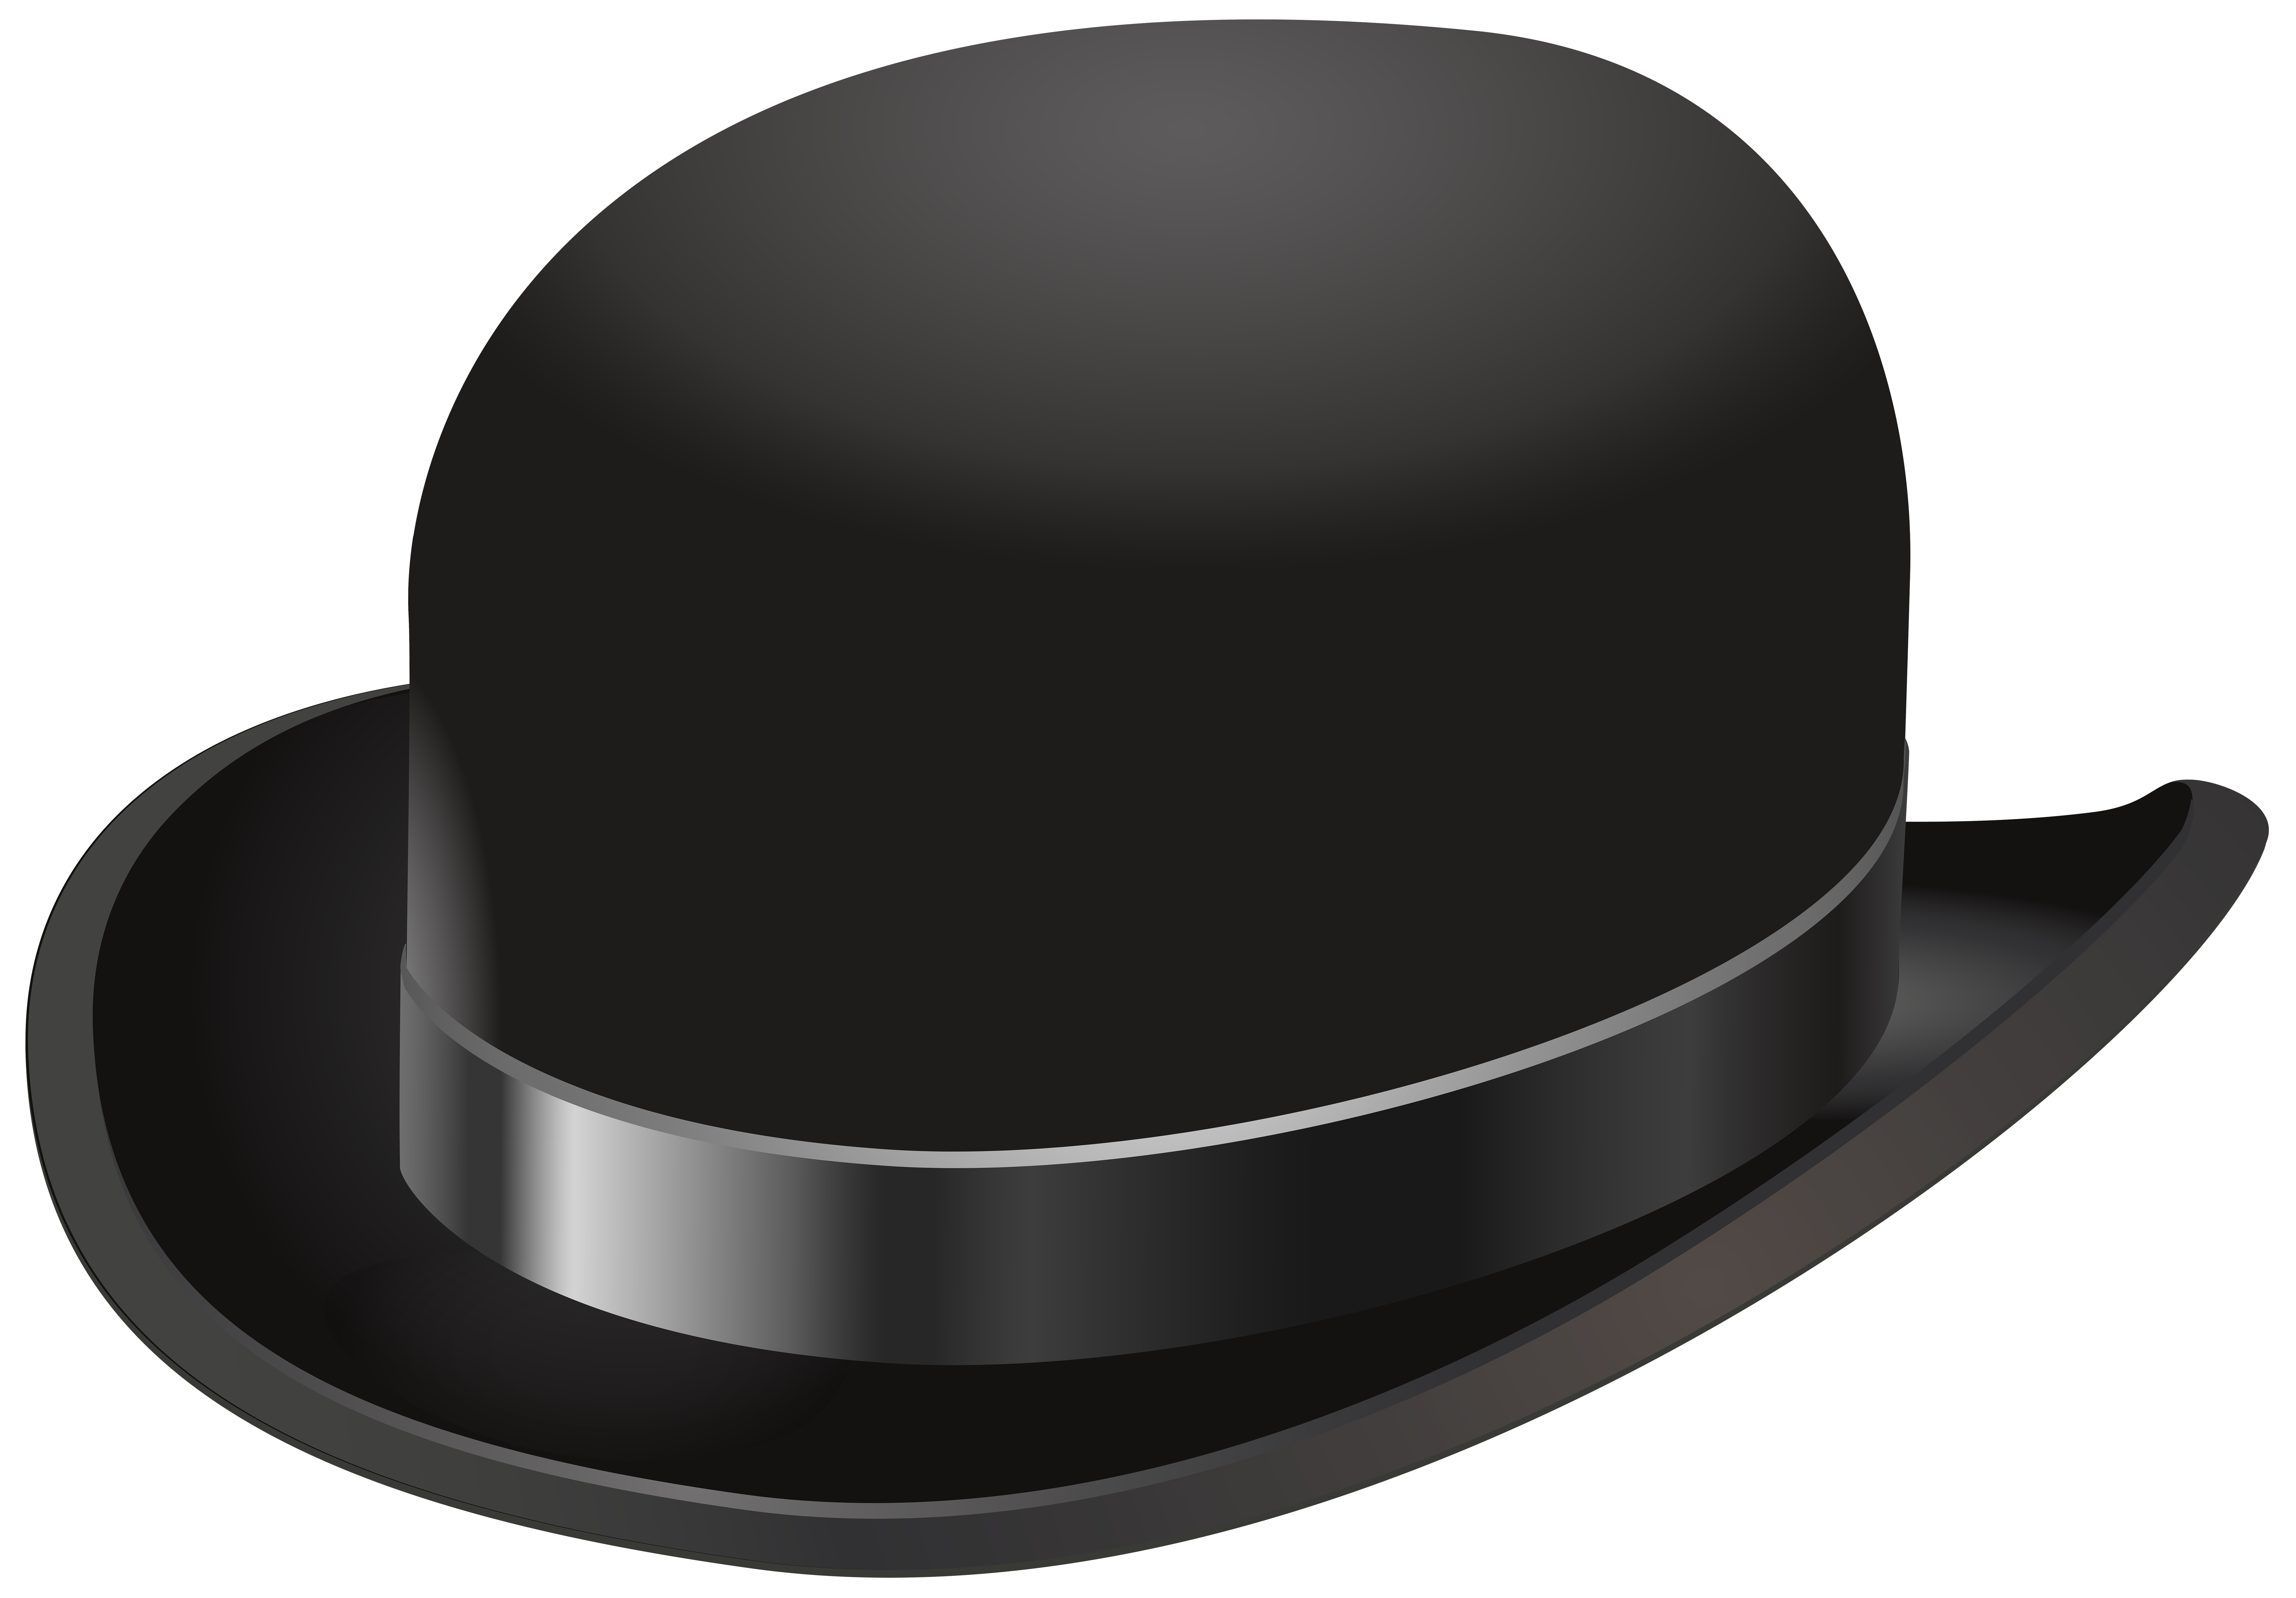 Bowler hat. Шляпа на прозрачном фоне. Шляпа "котелок" черная. Шапка котелок.